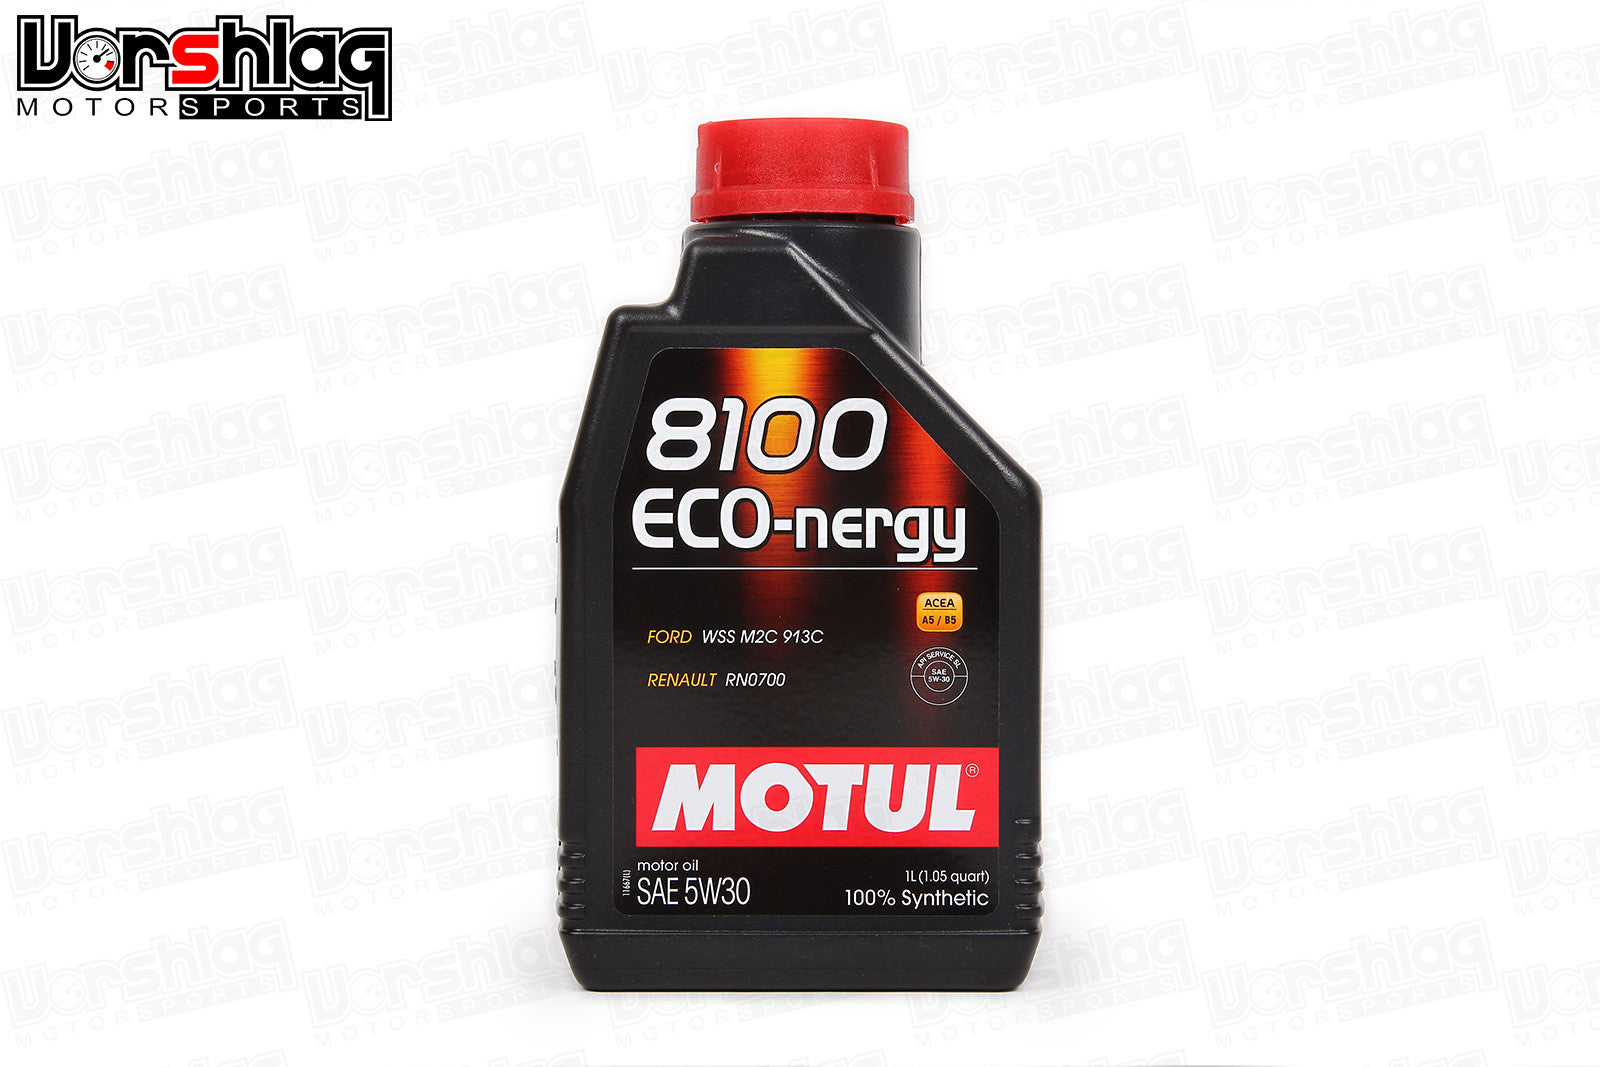 Motul 8100 ECO-NERGY 5W30 - 5L - Fully Synthetic Engine Motor Oil